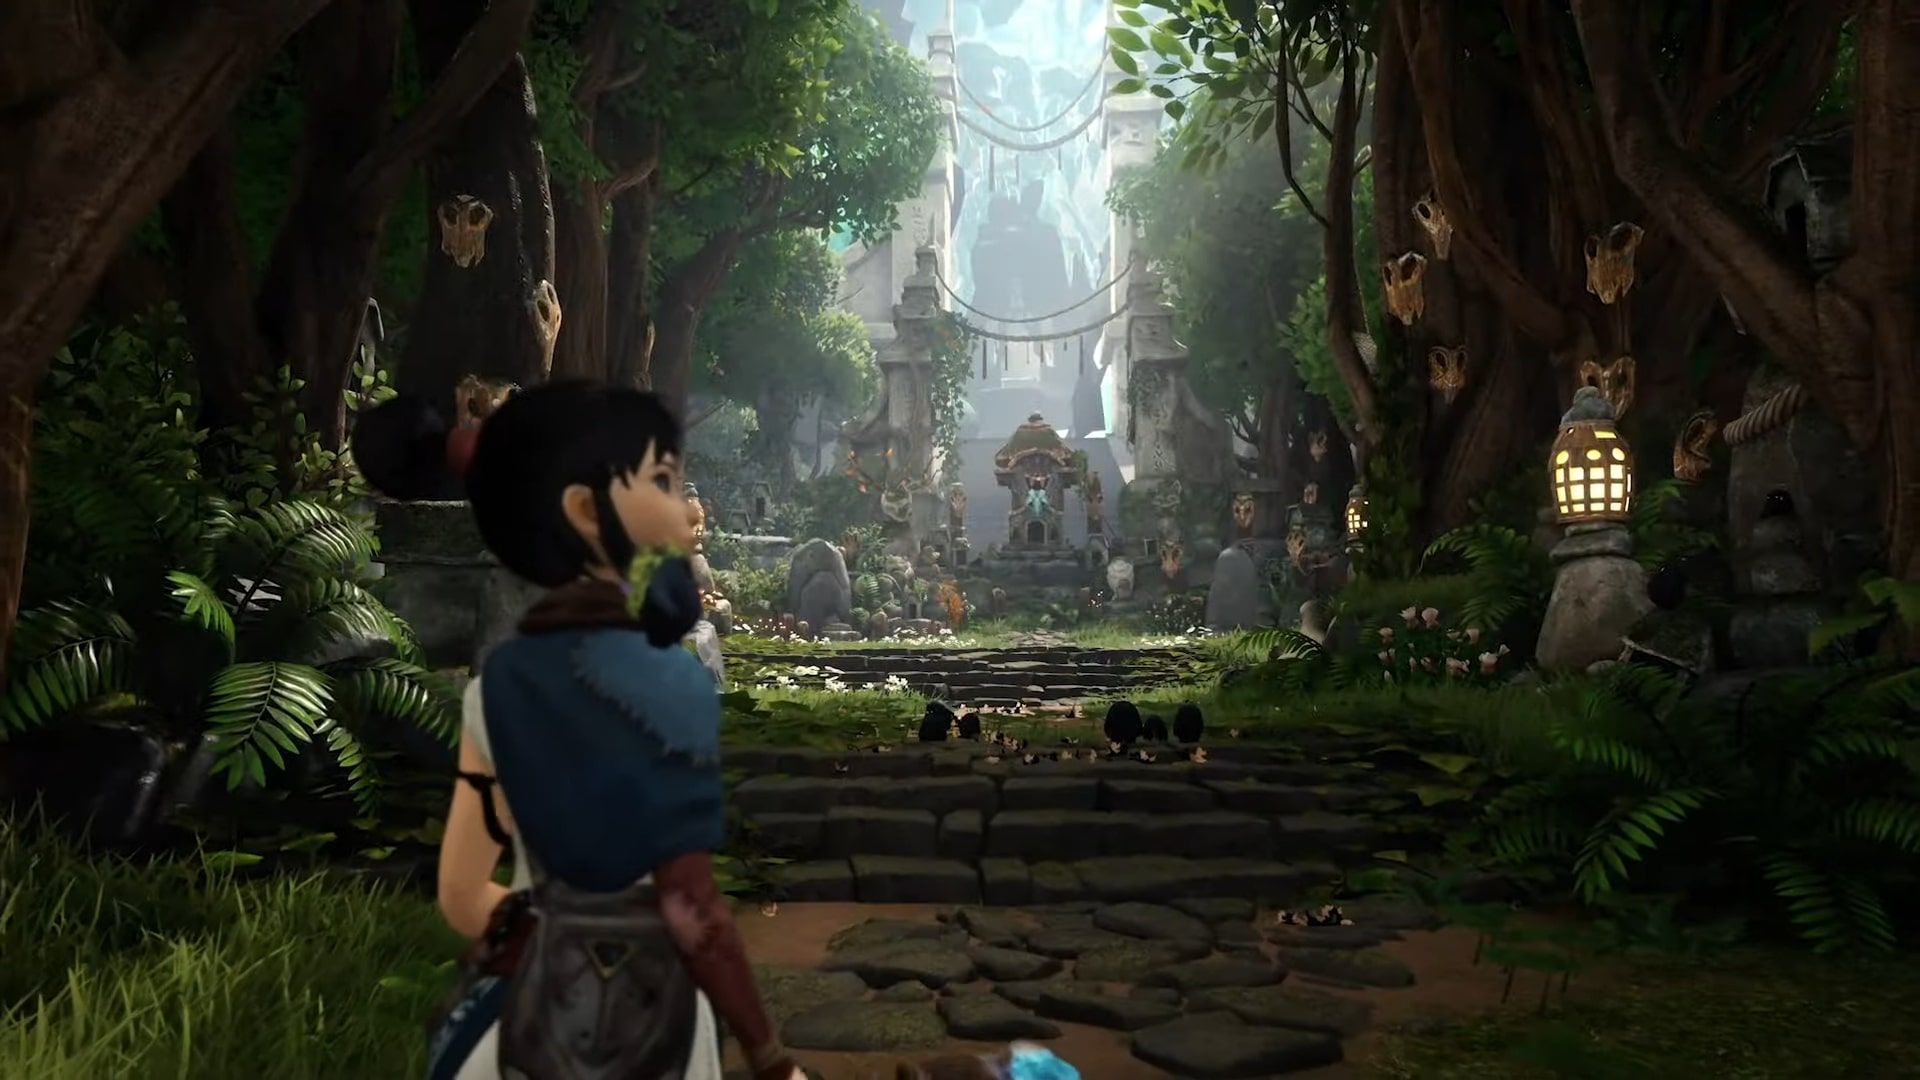 Kena: Bridge of Spirits, a delightful Pixar style adventure, announced